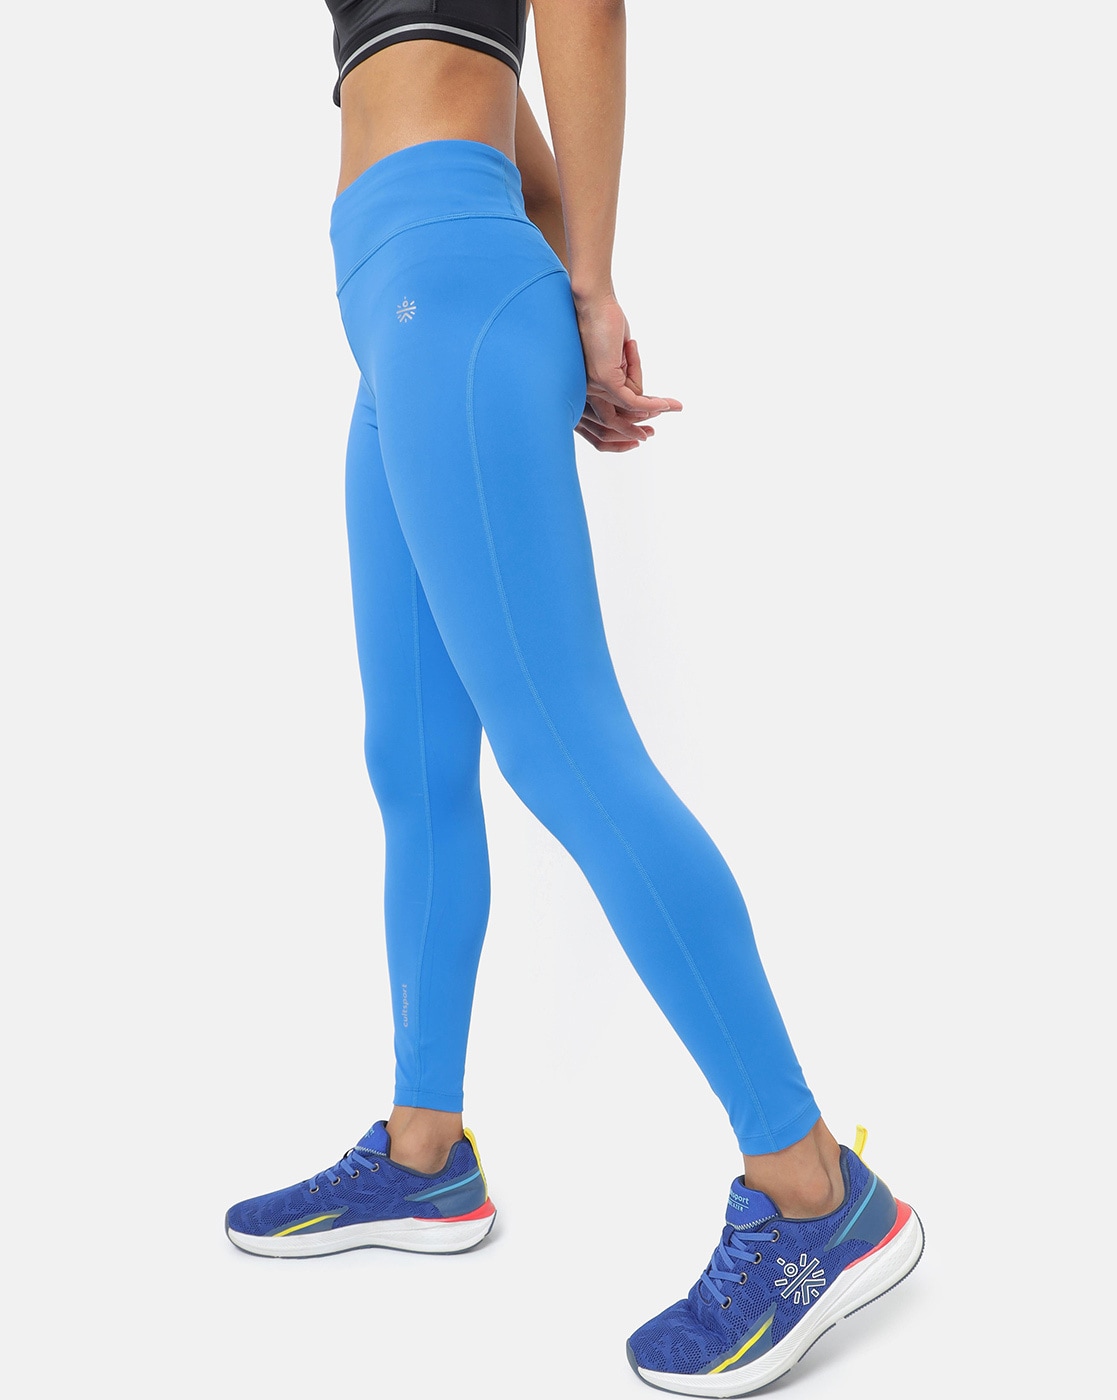 Power Workout Leggings - Blue Illuminate Floral Print, Women's Leggings